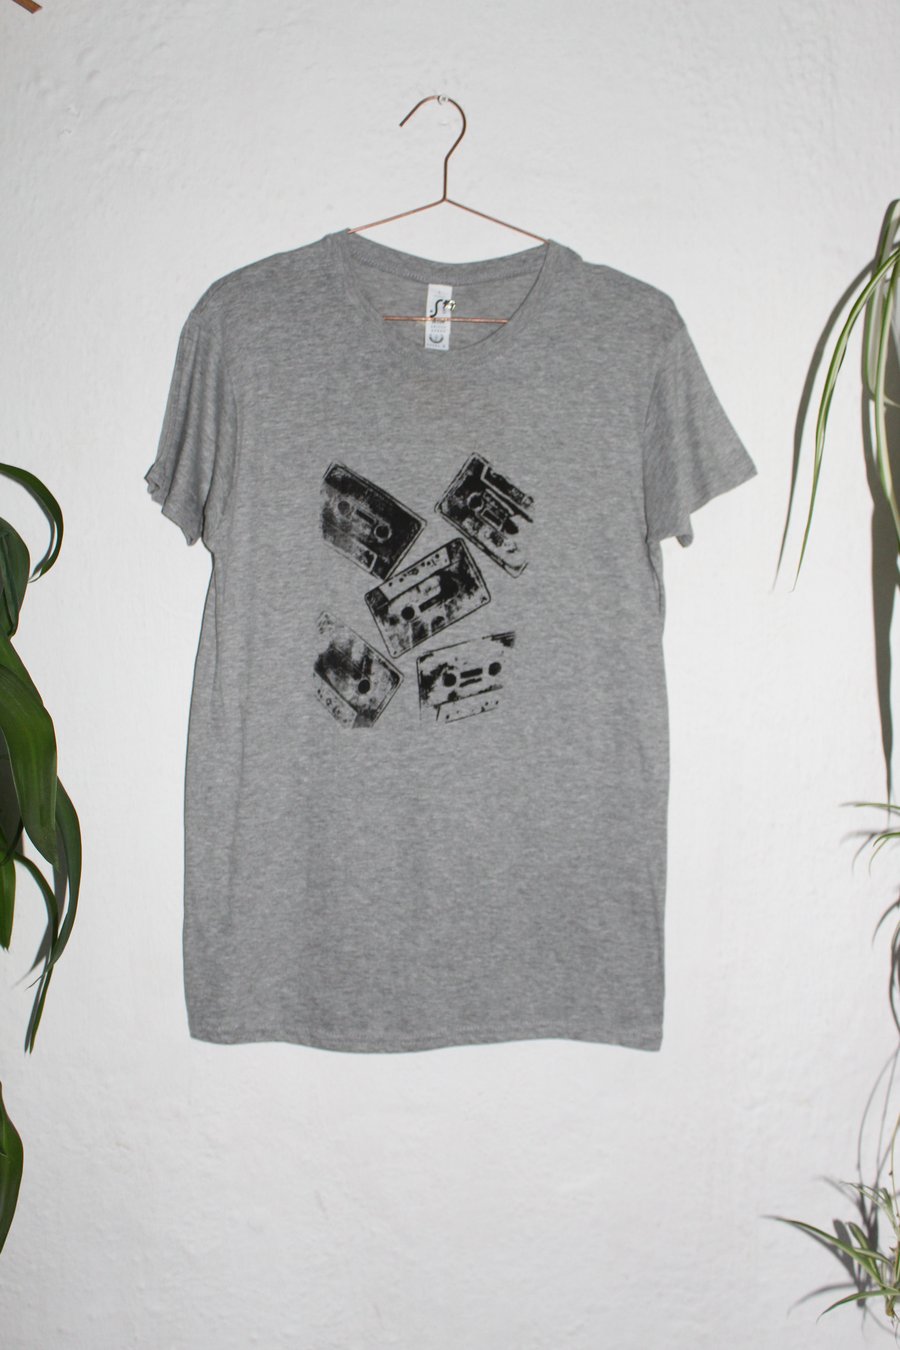 Unisex size XL Grey, New organic cotton T shirt,retro tape cassette screen print